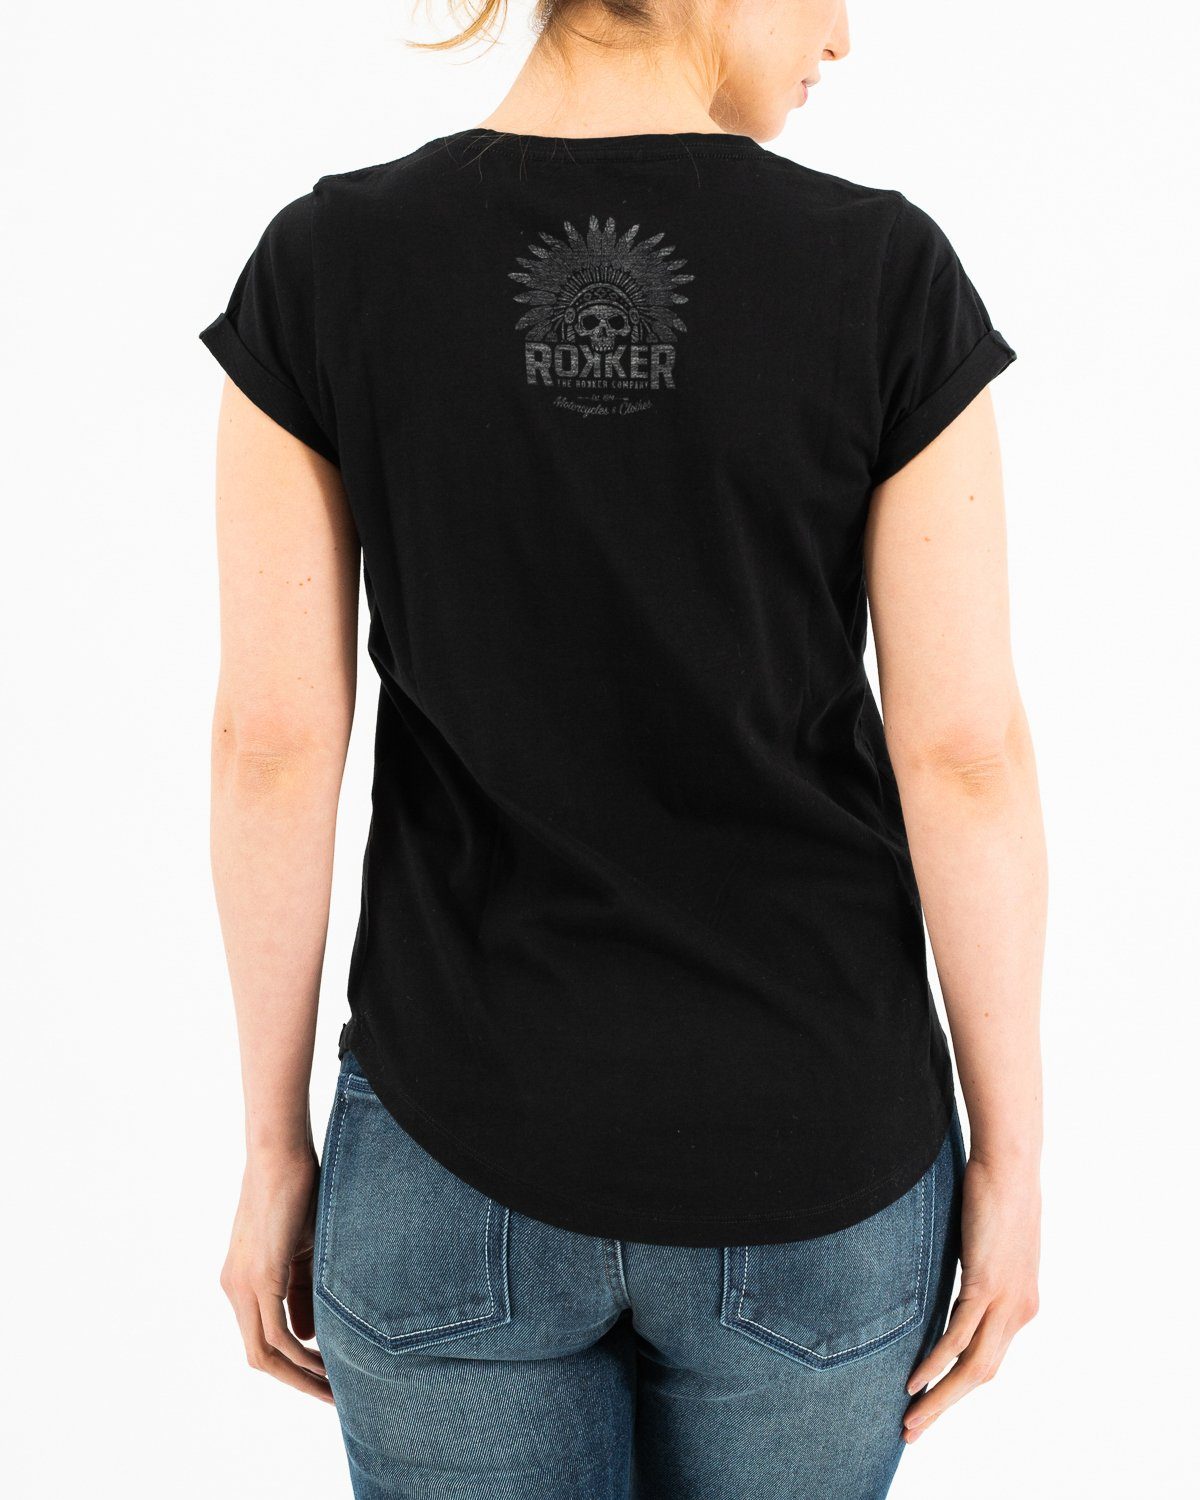 Indian Bonnet T-Shirt The Rokker Company 